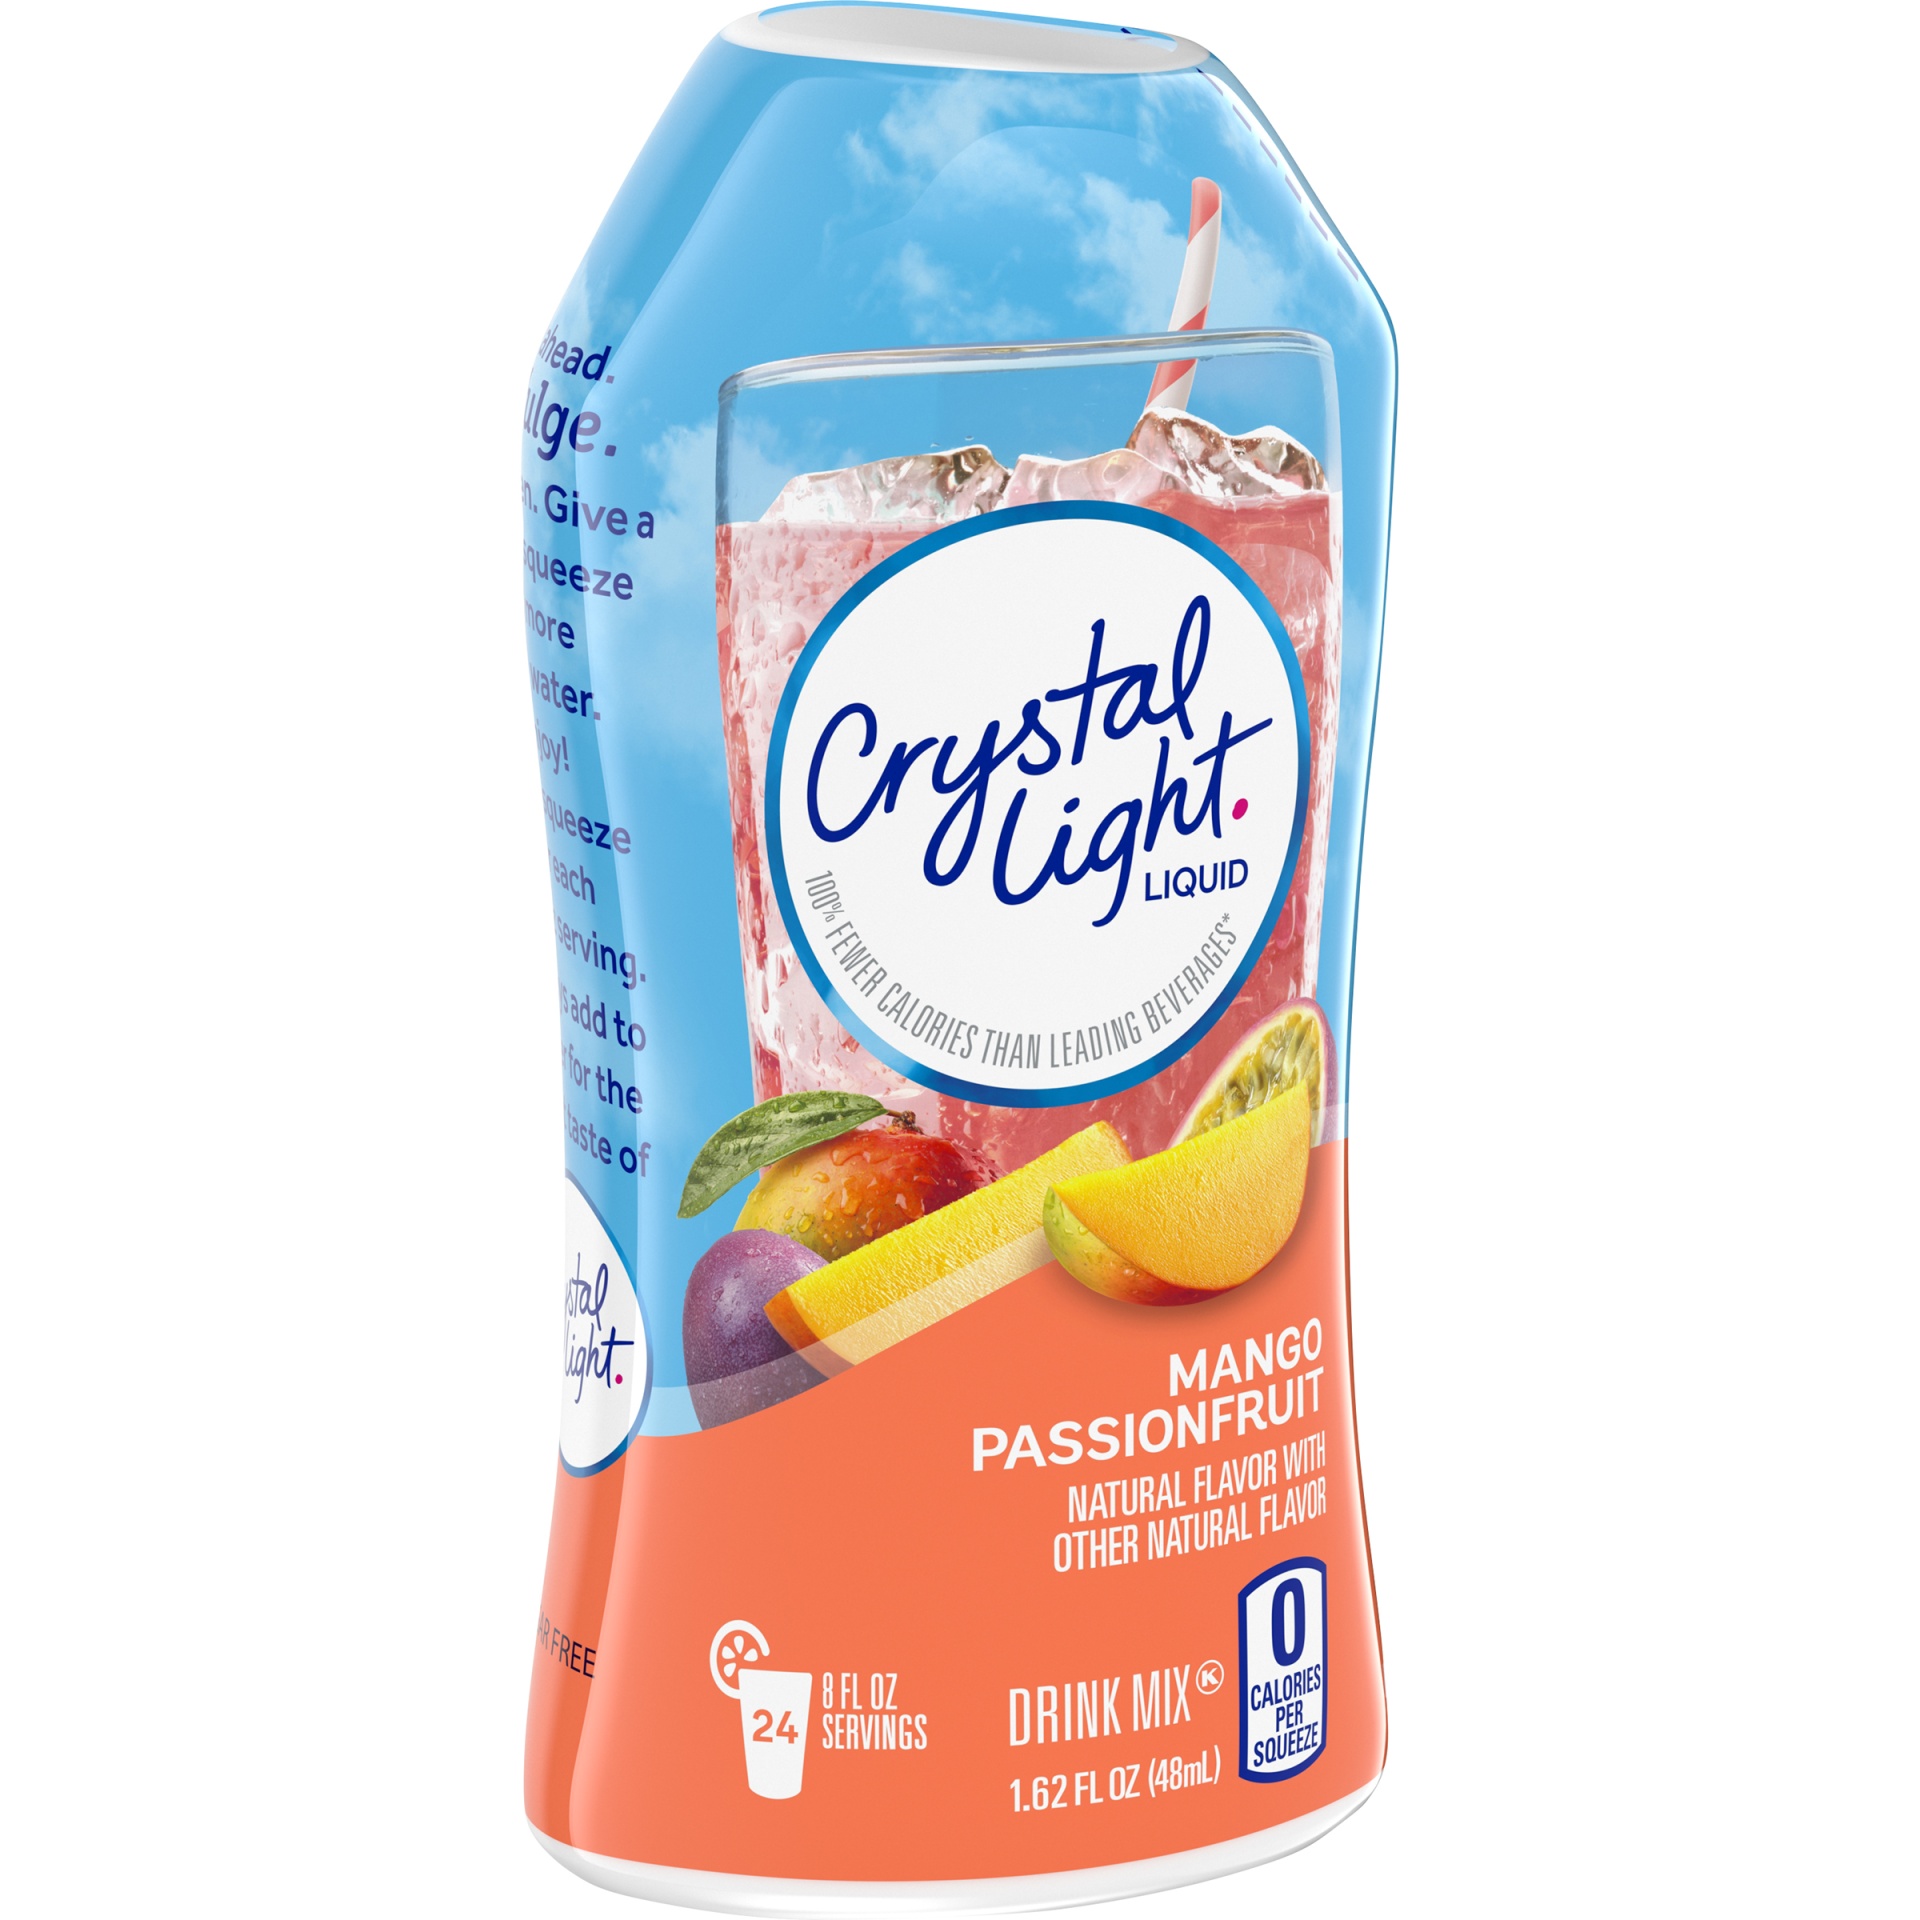 slide 7 of 11, Crystal Light Liquid Mango Passionfruit Naturally Flavored Drink Mix, 1.62 fl oz